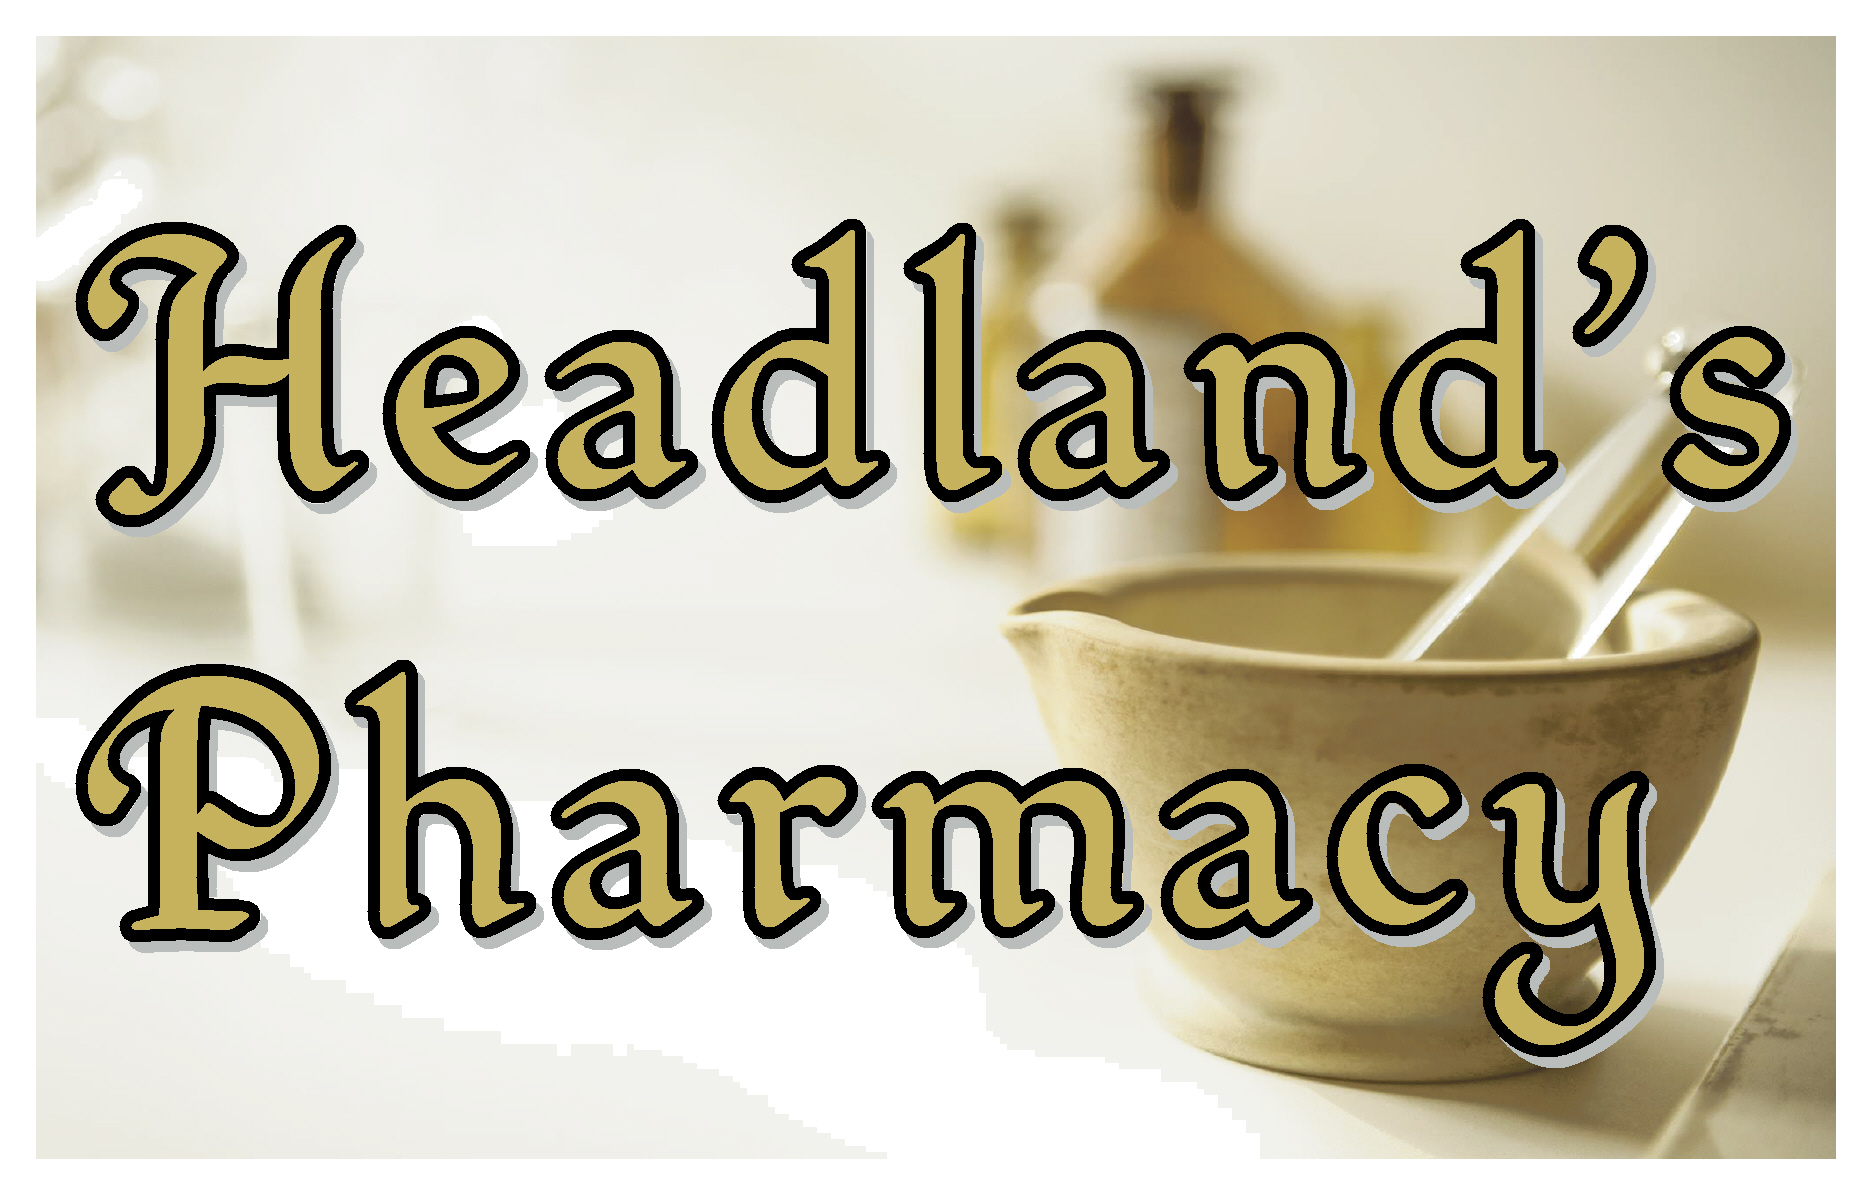 Headlands Pharmacy